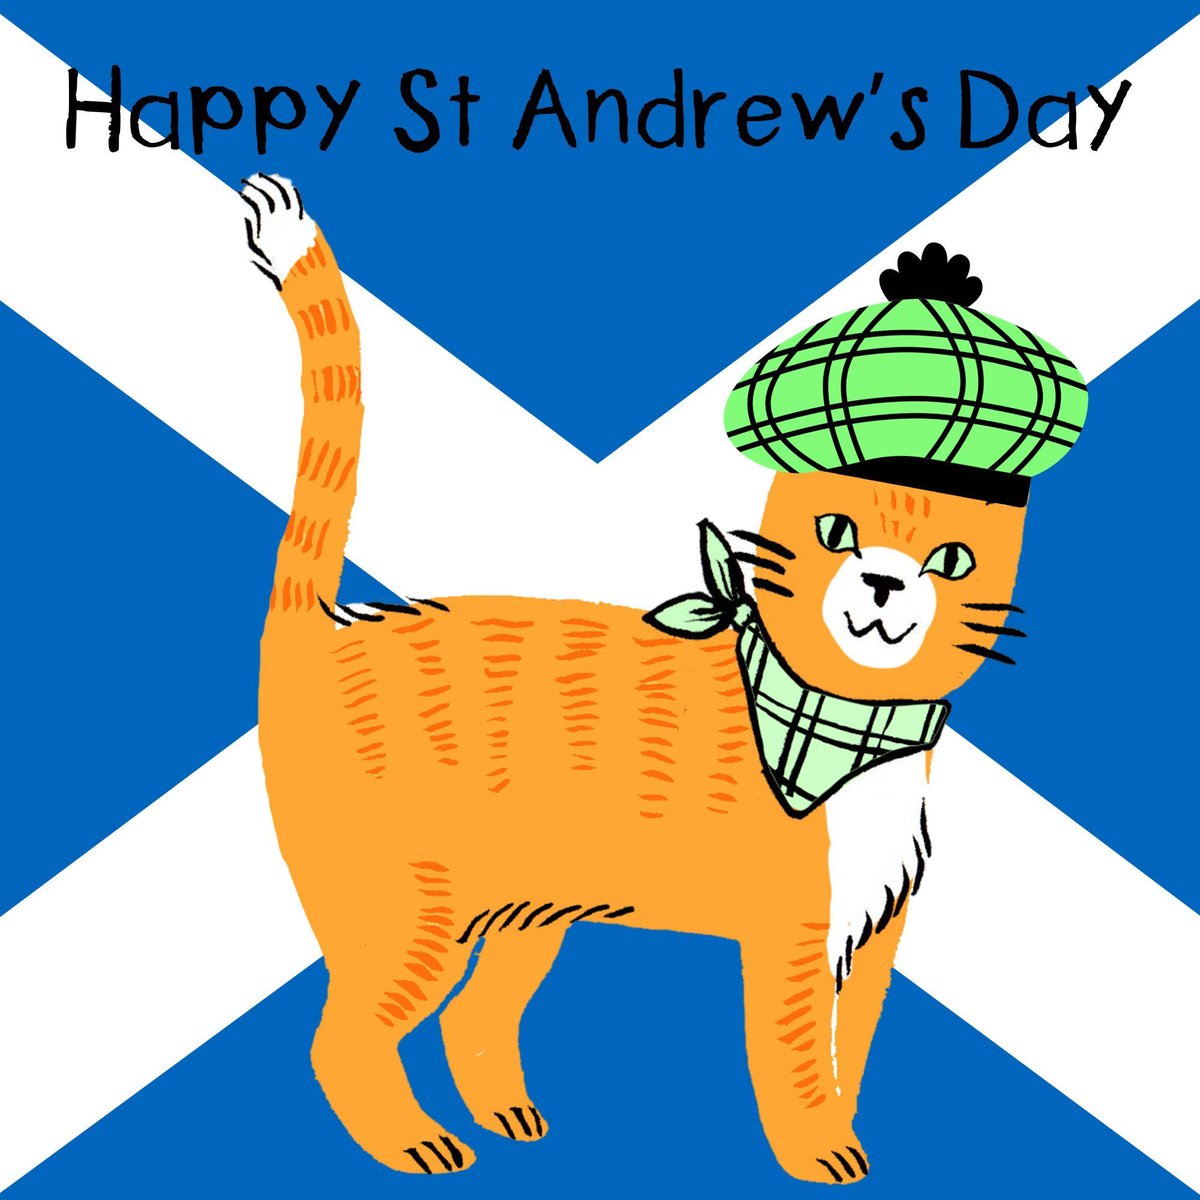 Happy St Andrew's Day everyone! #StAndrewsDay #Scotland #ScottishCulture #ScottishArts #visitscotland #kingdomoffife #welcometofife #visitfife  #eastneuk